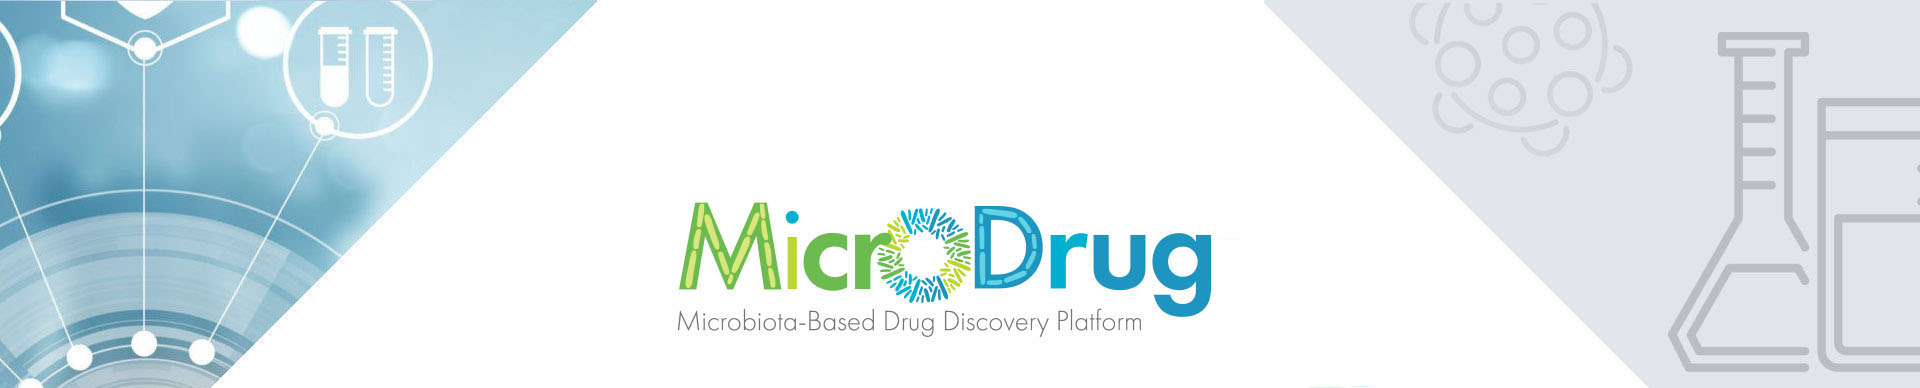 Drug Discovery Platform